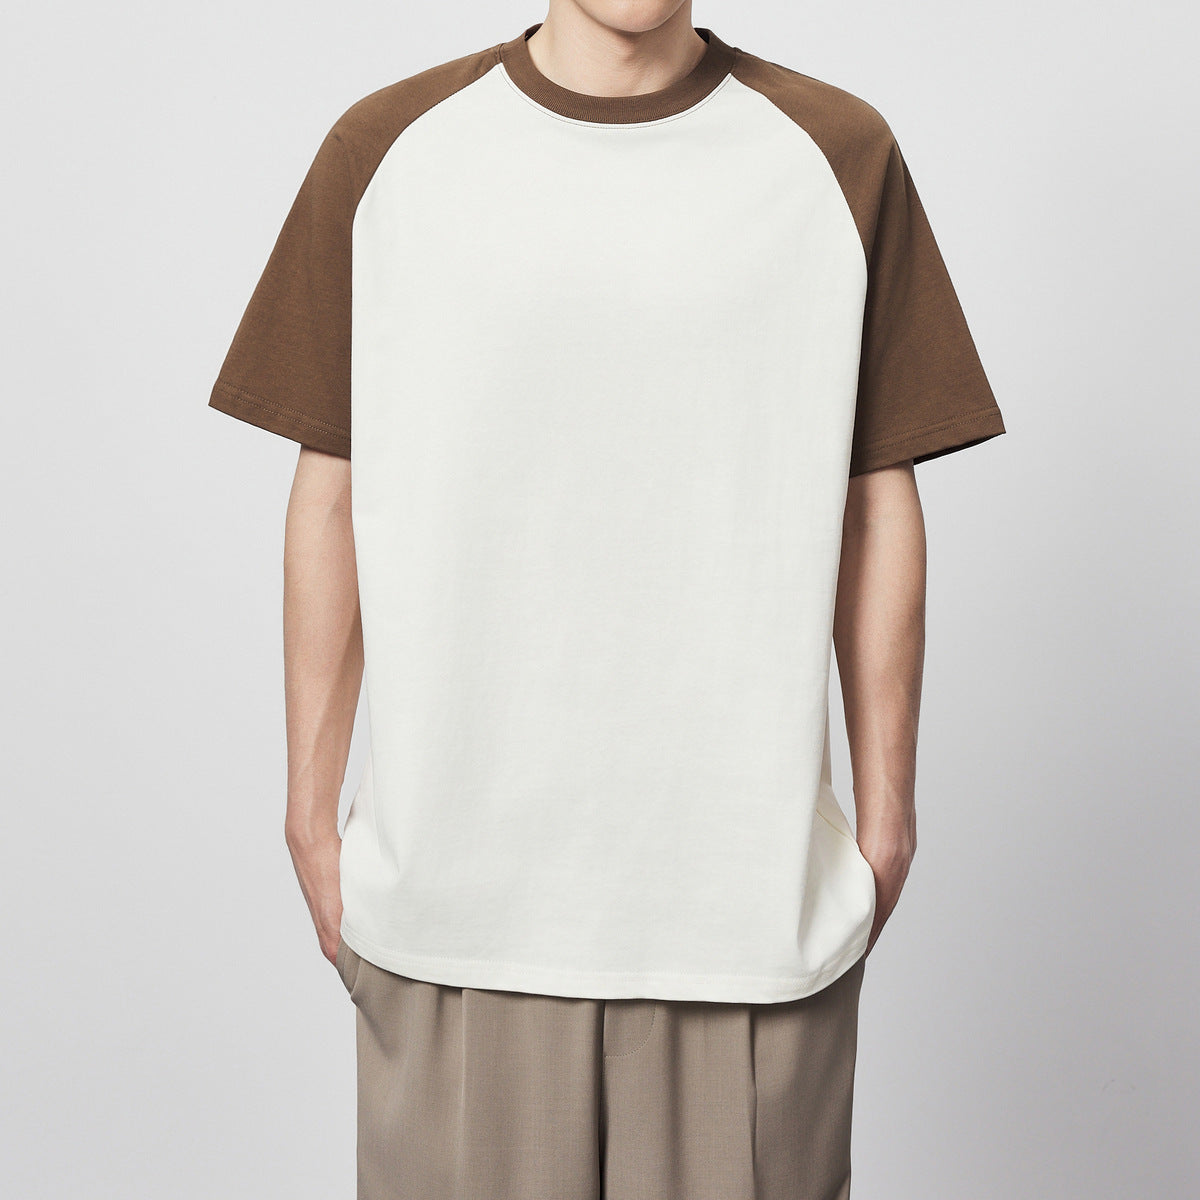 Cotton Contrast Color Short-sleeved Raglan Loose T-shirt